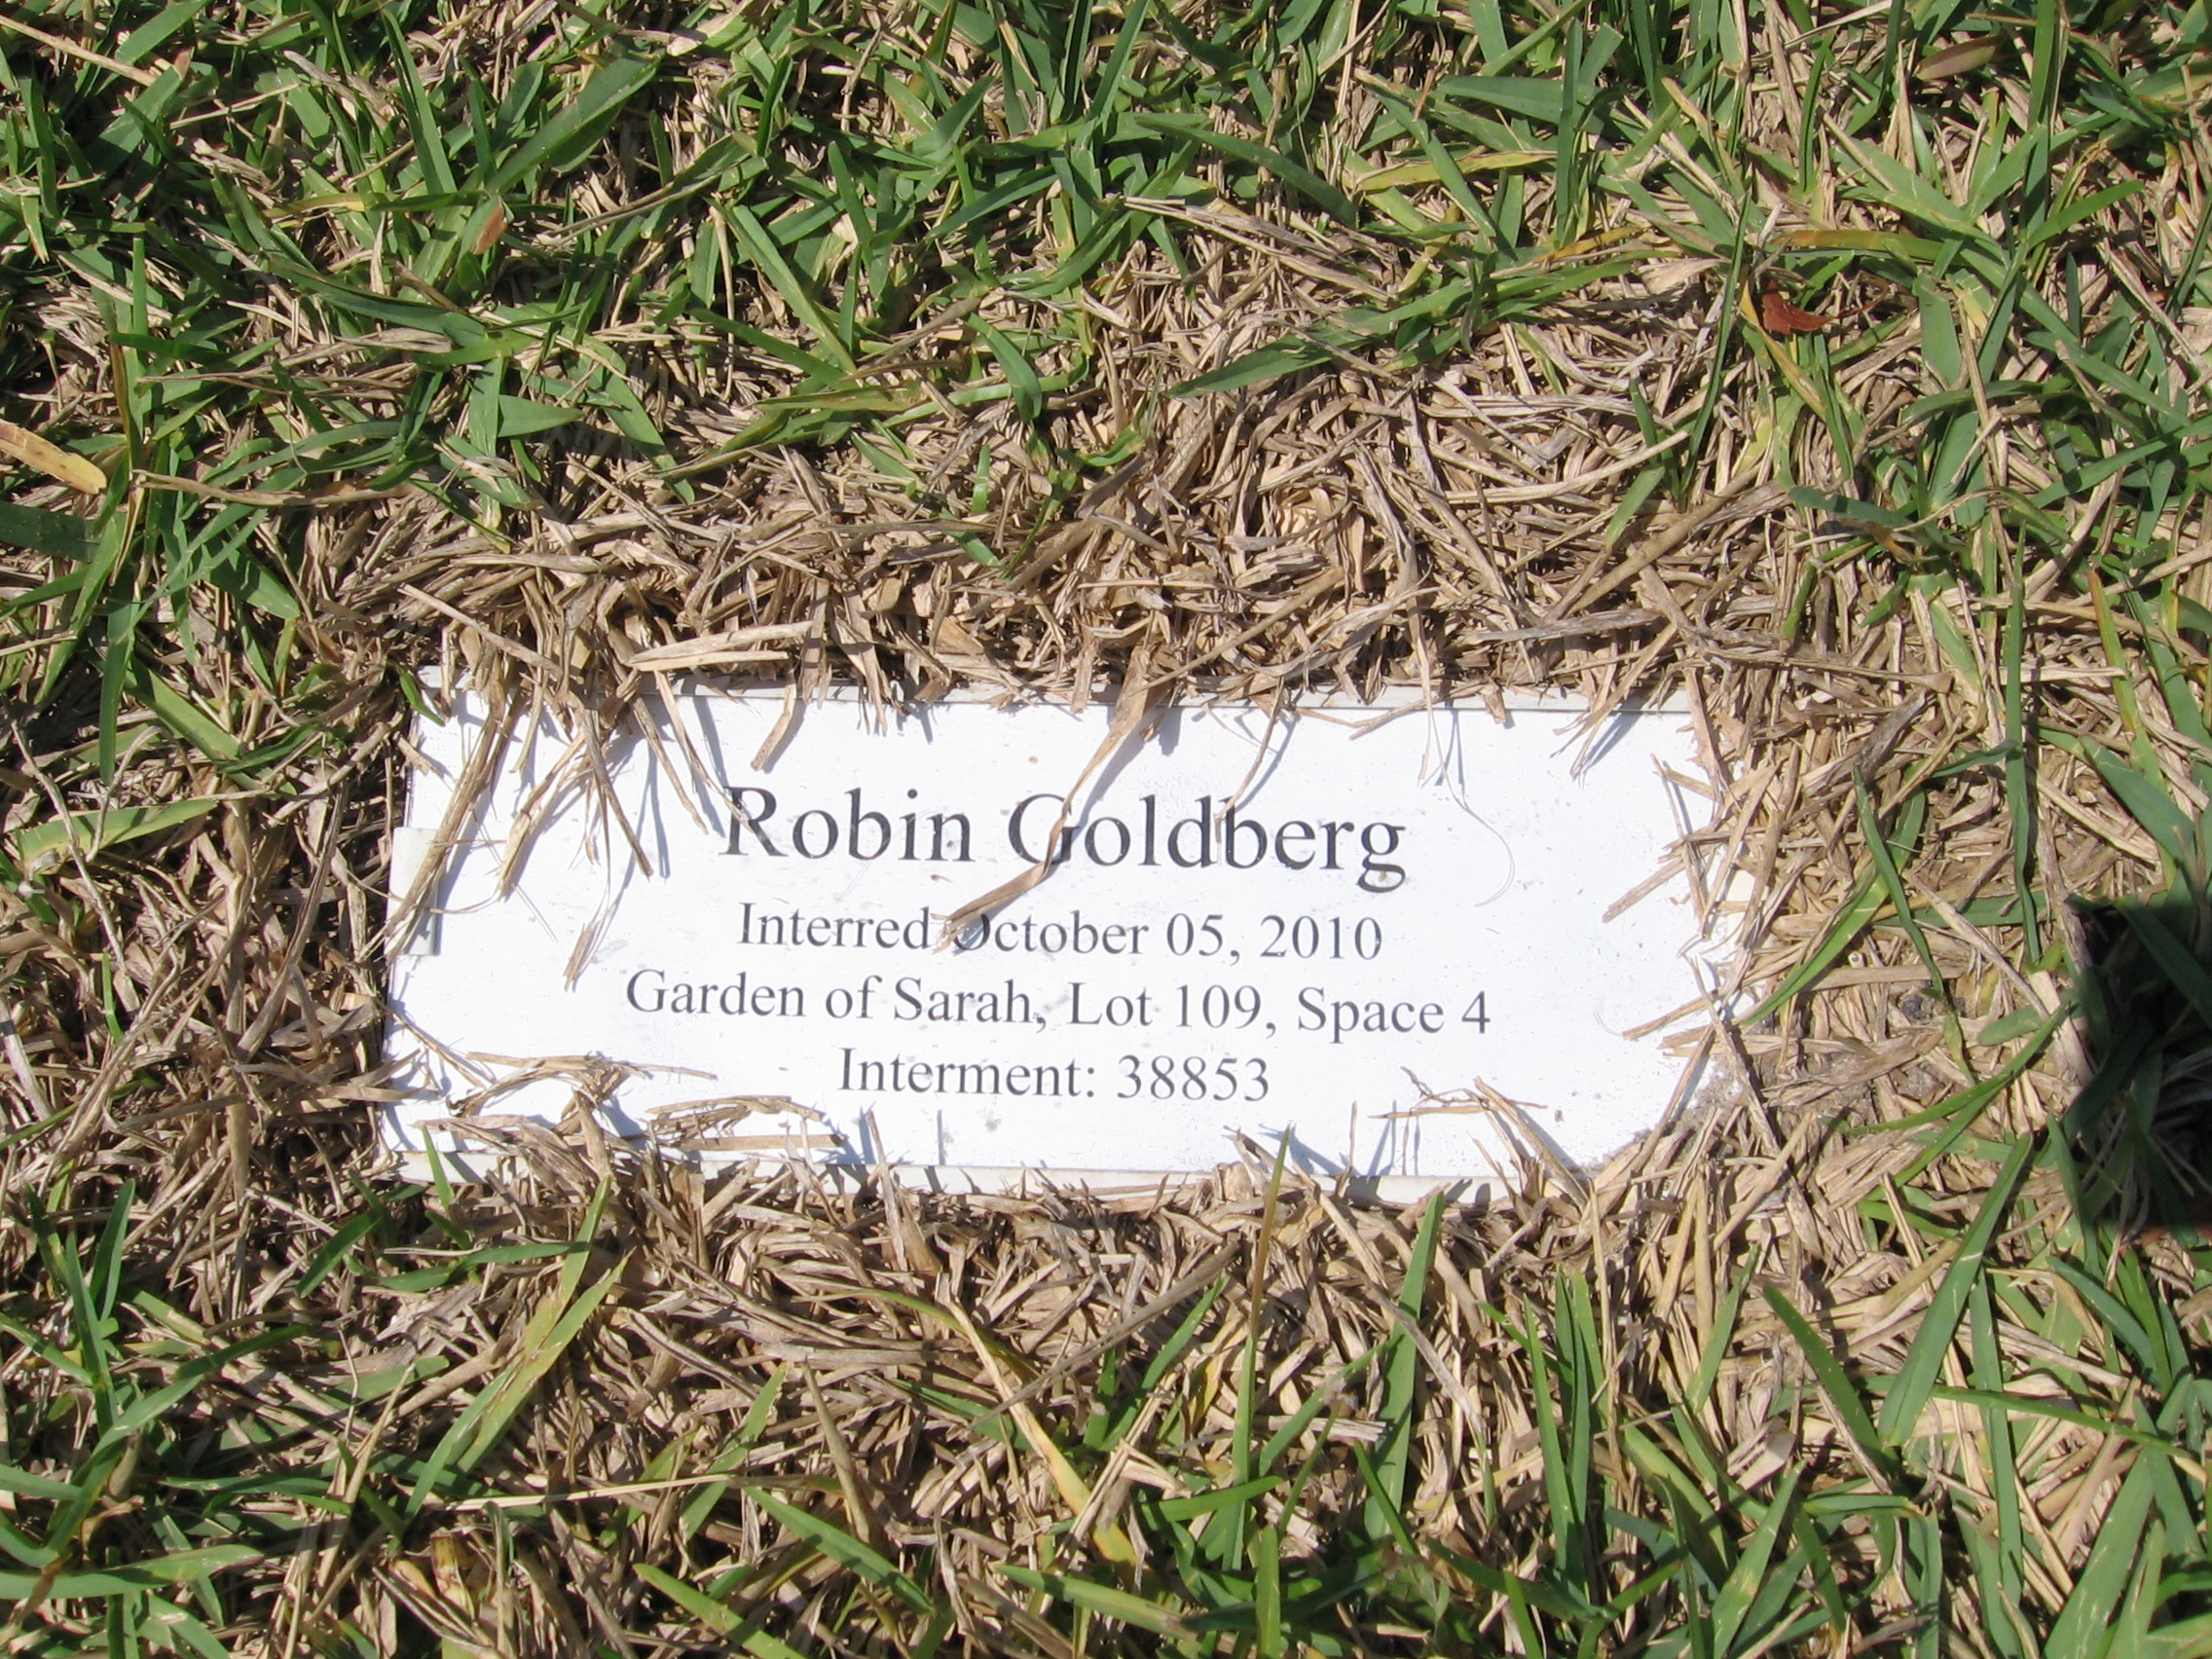 Robin Goldberg